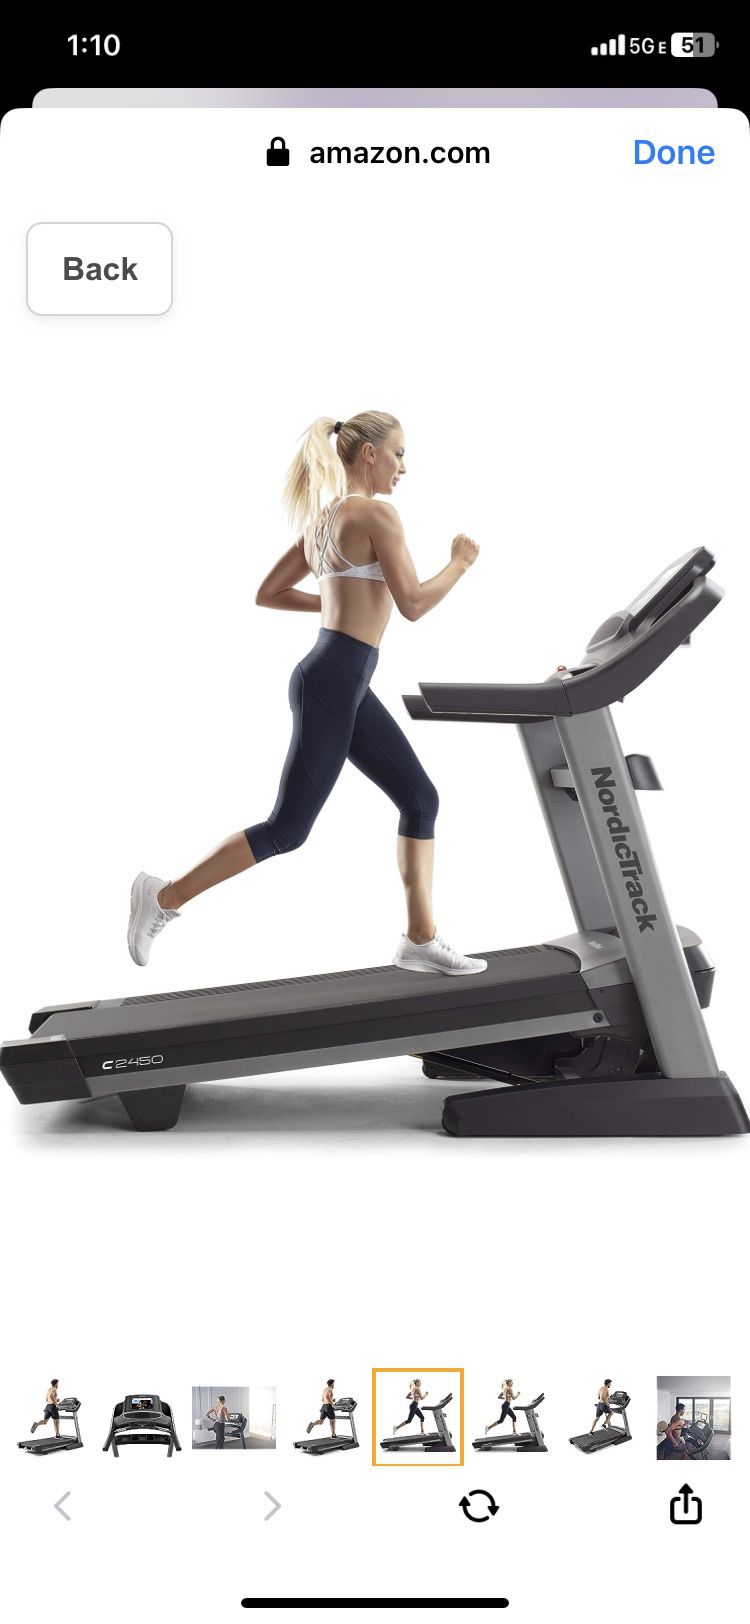 Nordictrack 1750 comical seriescomical series treadmill